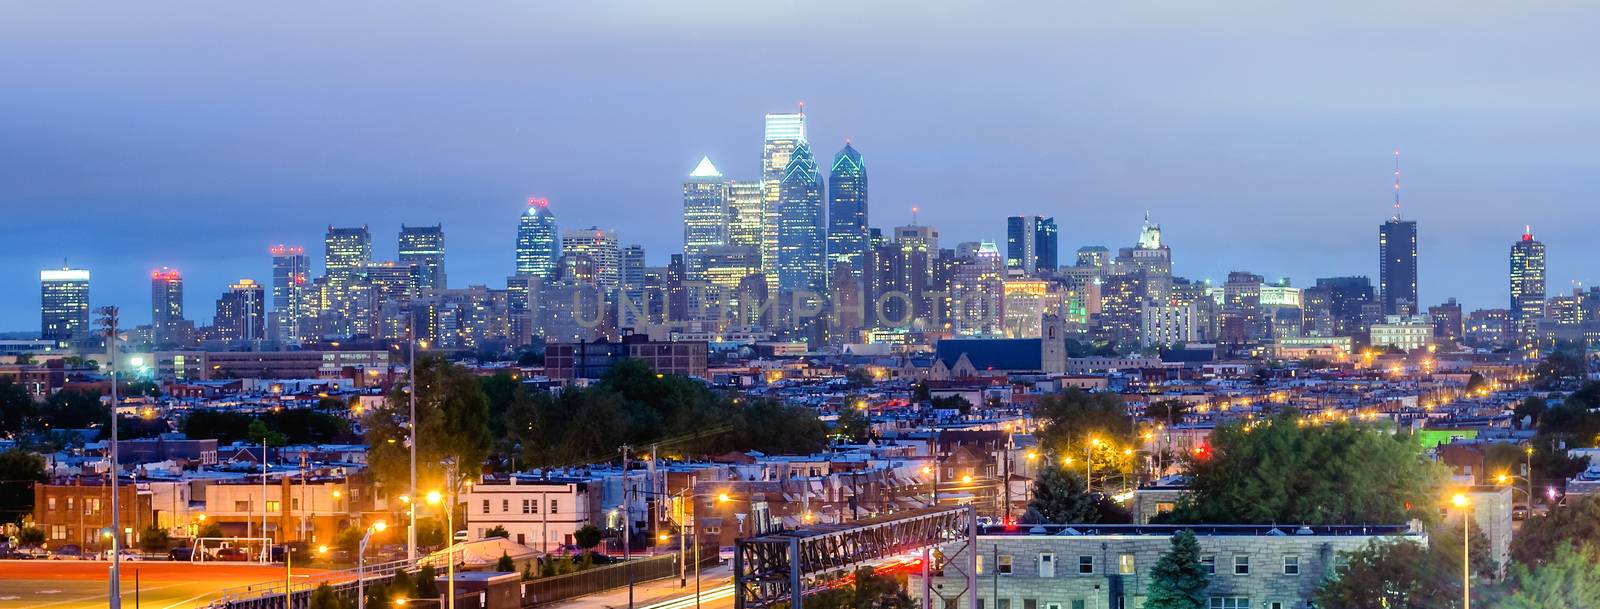 Philadelphia skyline at night, USA by marcorubino